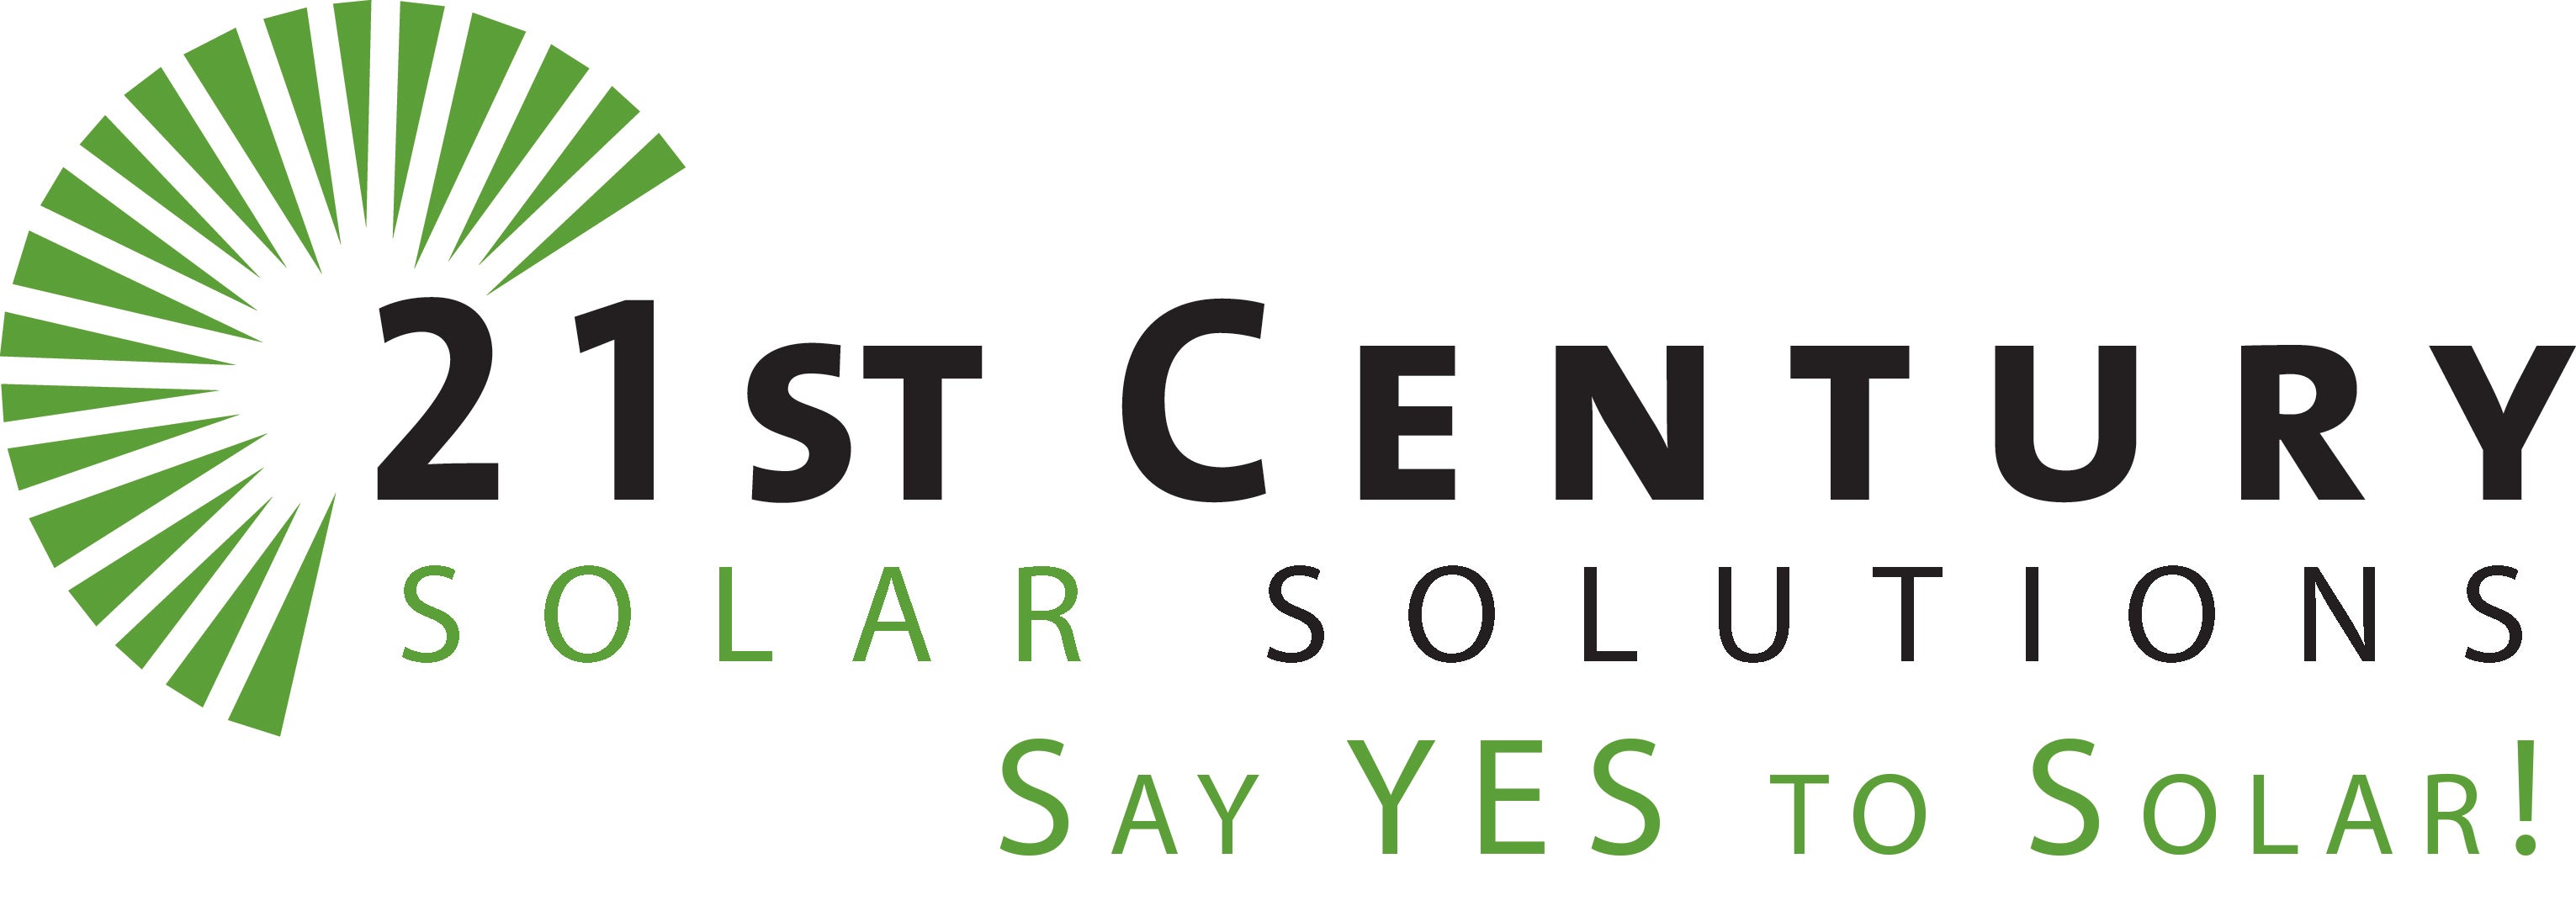 21st Century Power Solutions, LLC